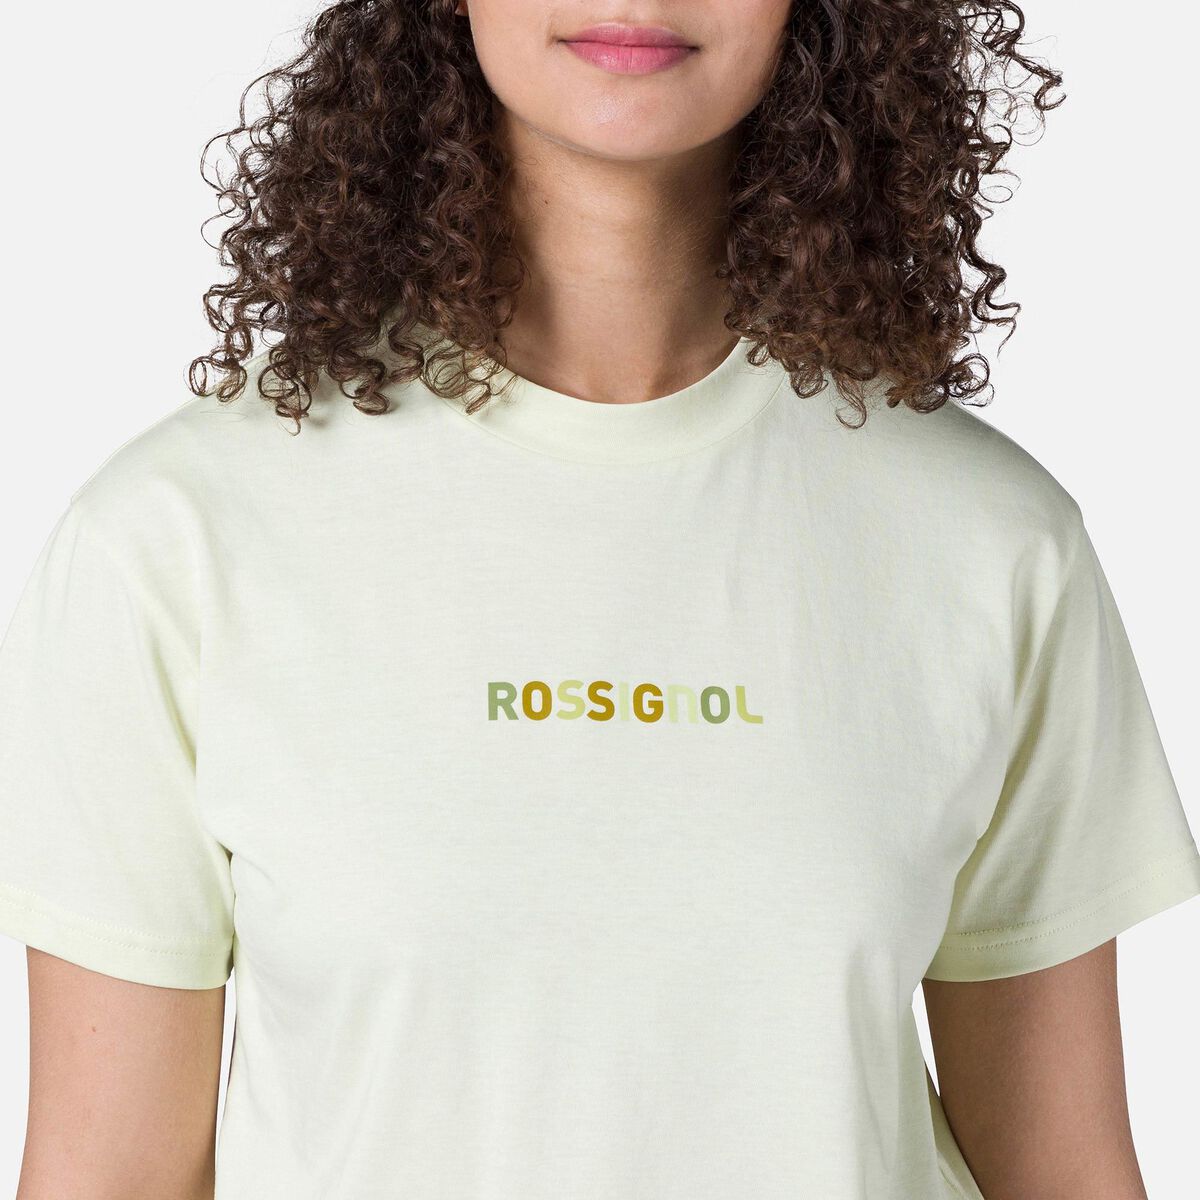 Camiseta estampada para mujer